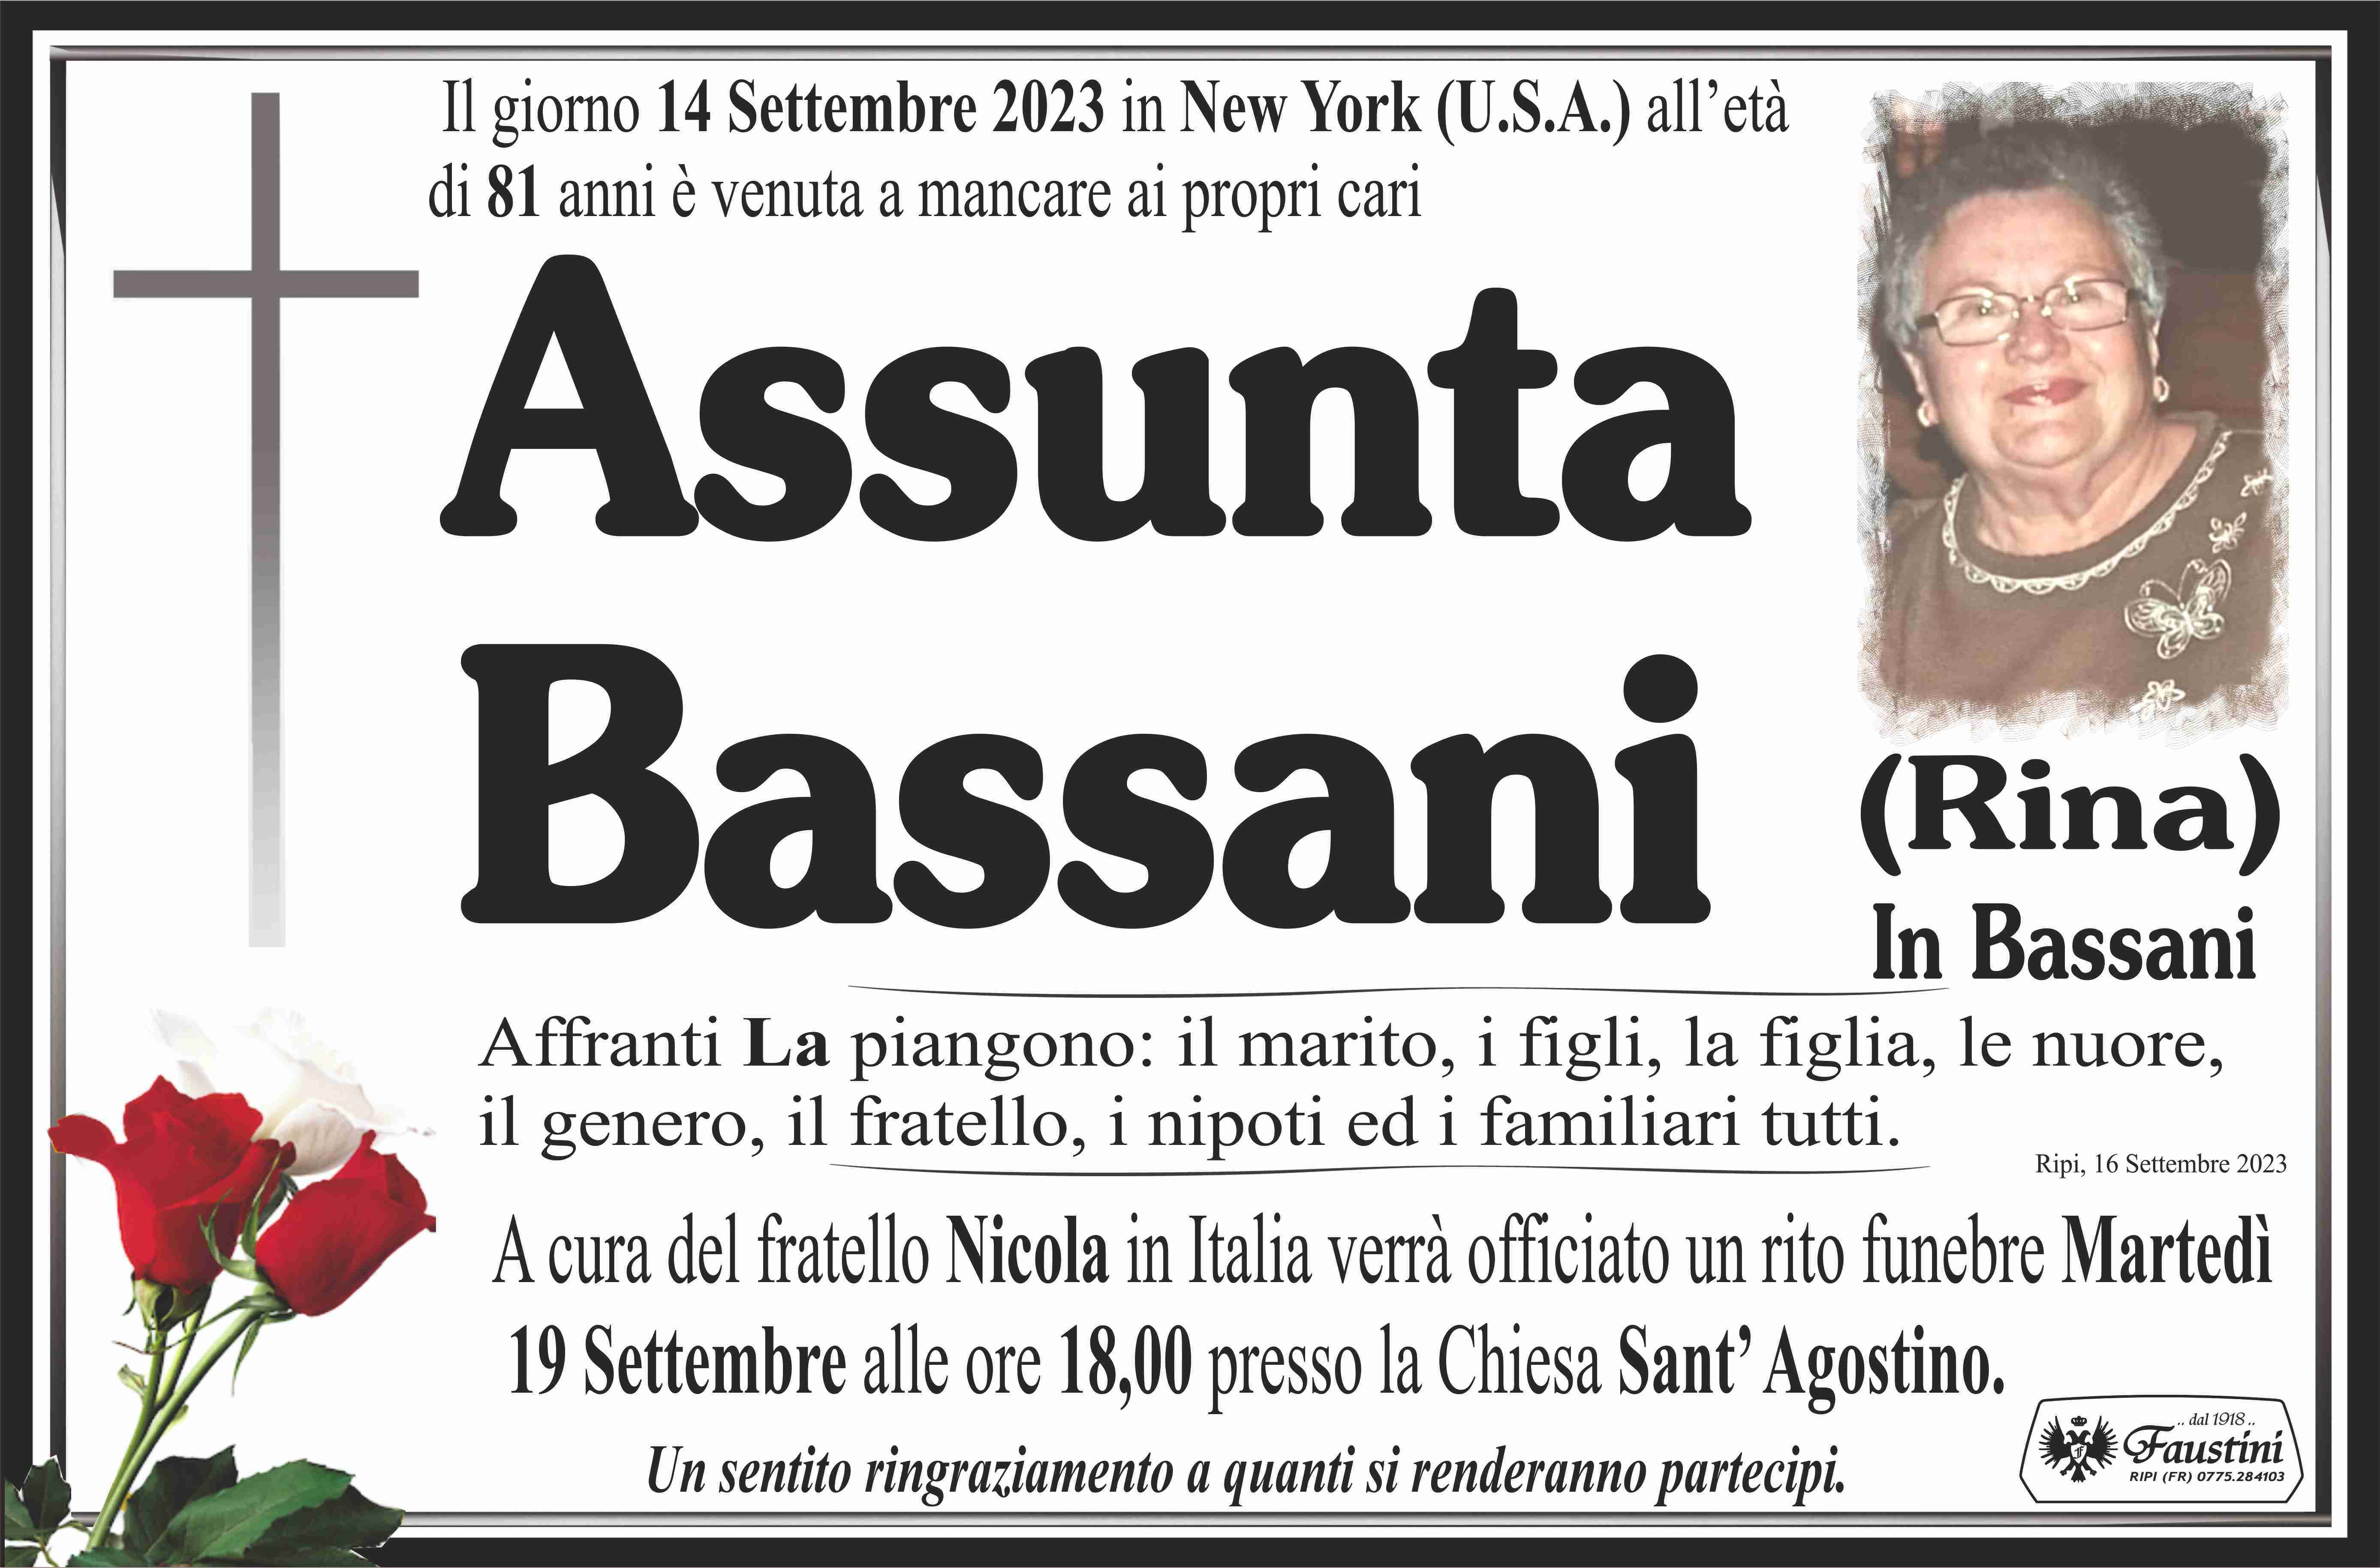 Assunta Bassani